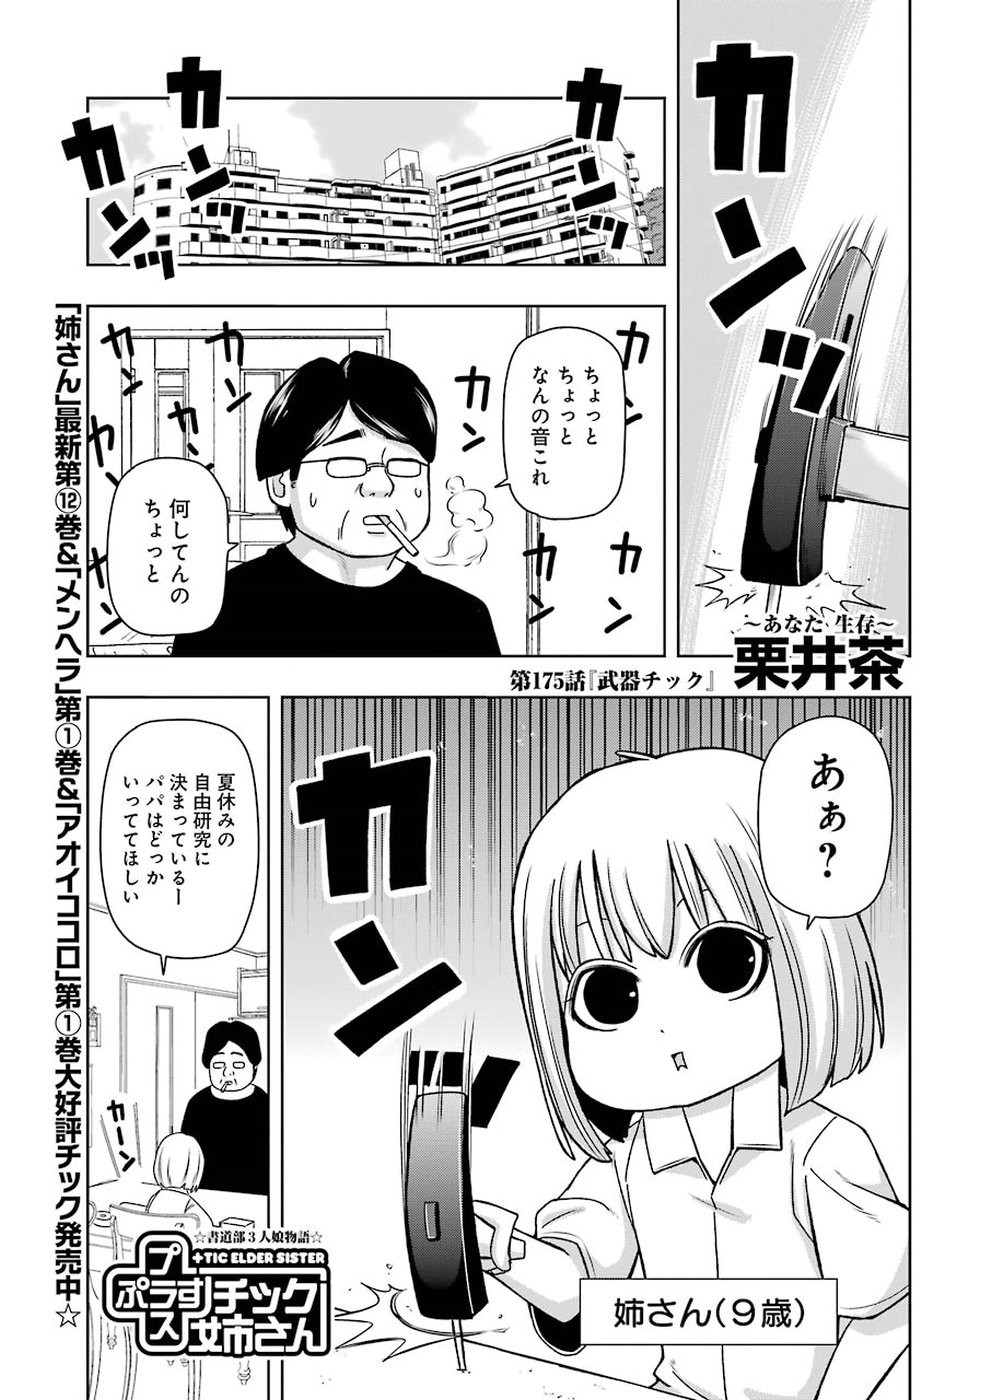 Tic Nee San Chapter 175 Page 1 Raw Manga 生漫画